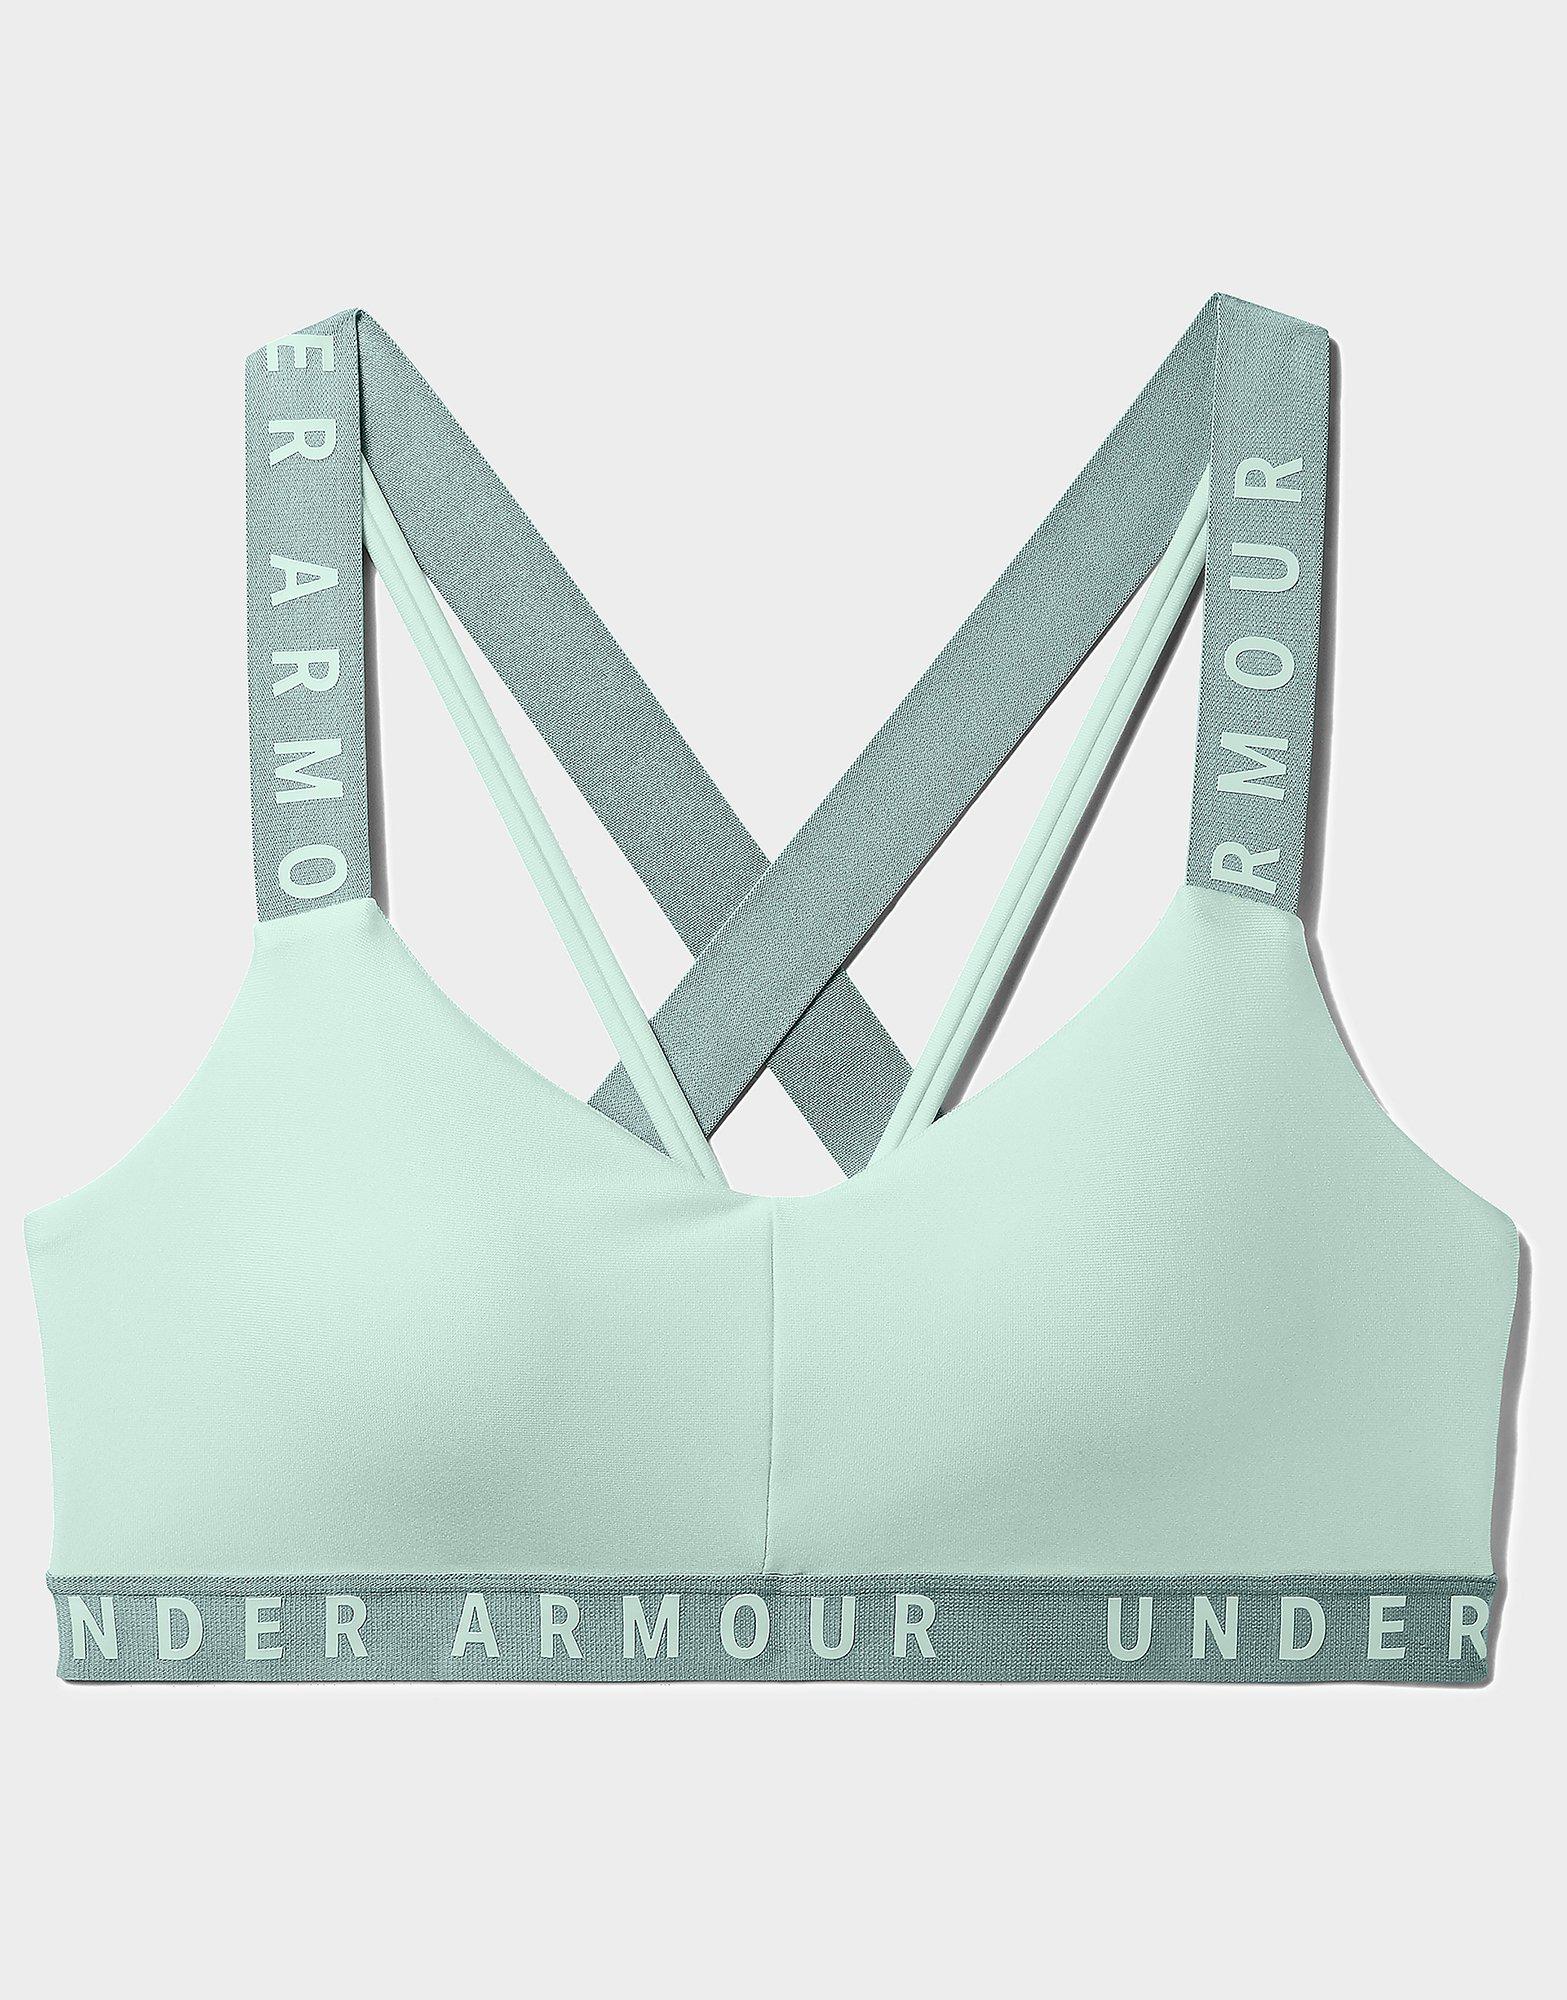 under armour tape strappy bra